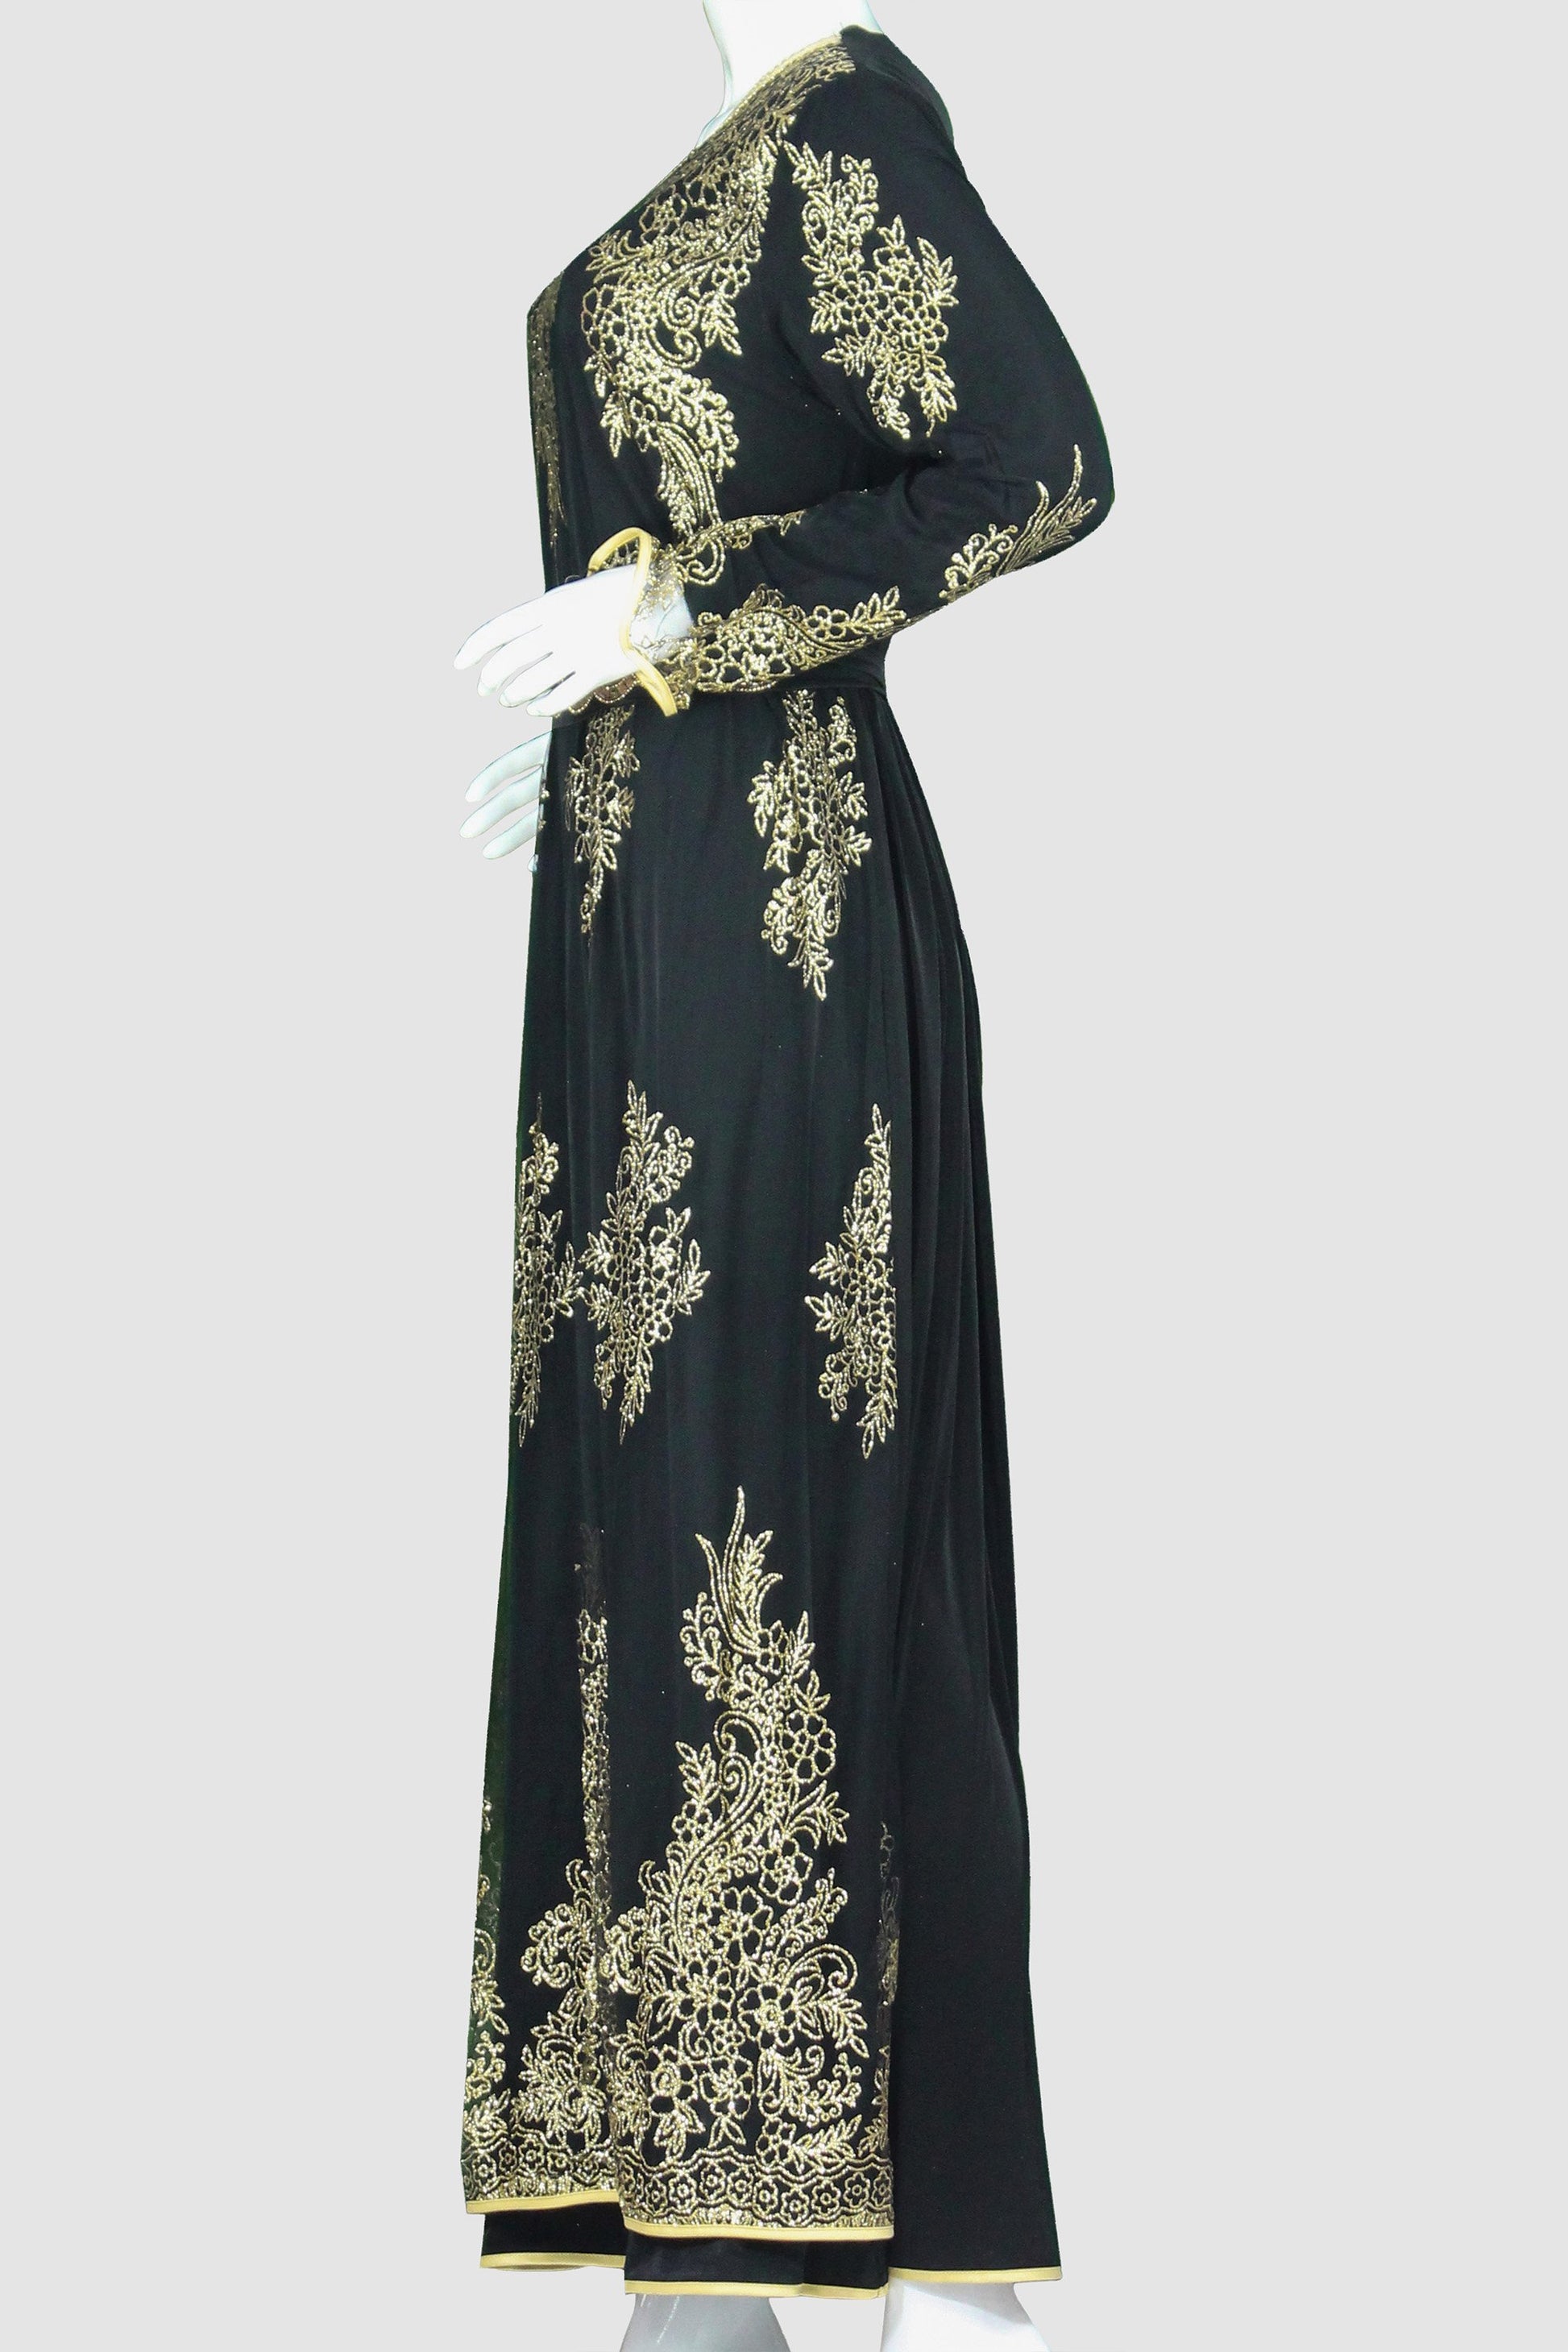 Black Dress 2-Layer With Gold Glitter Design-almanaar Islamic Store